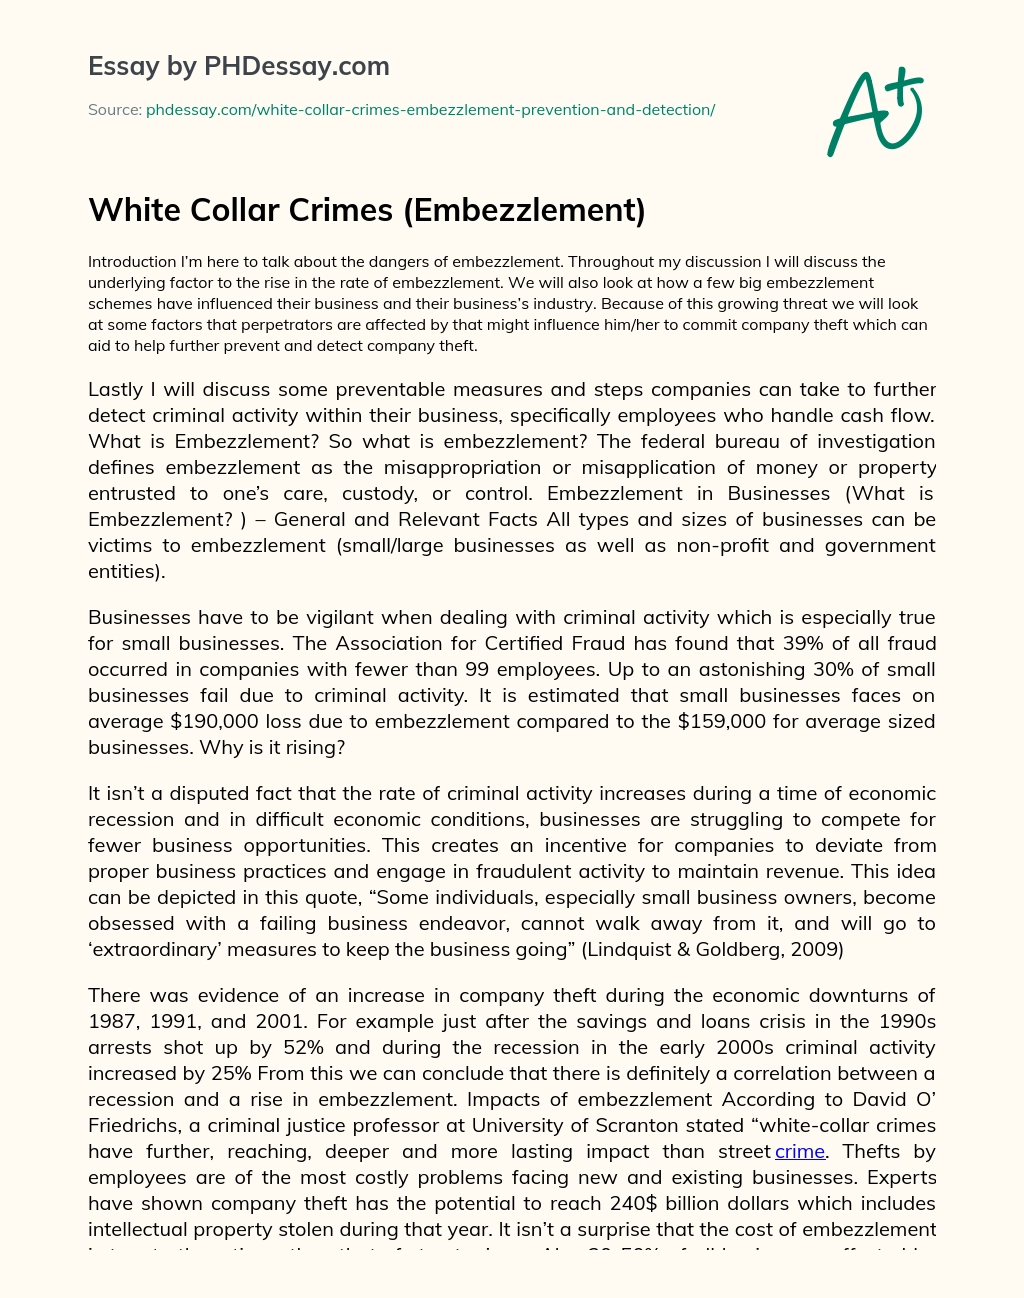 White Collar Crimes (Embezzlement) essay